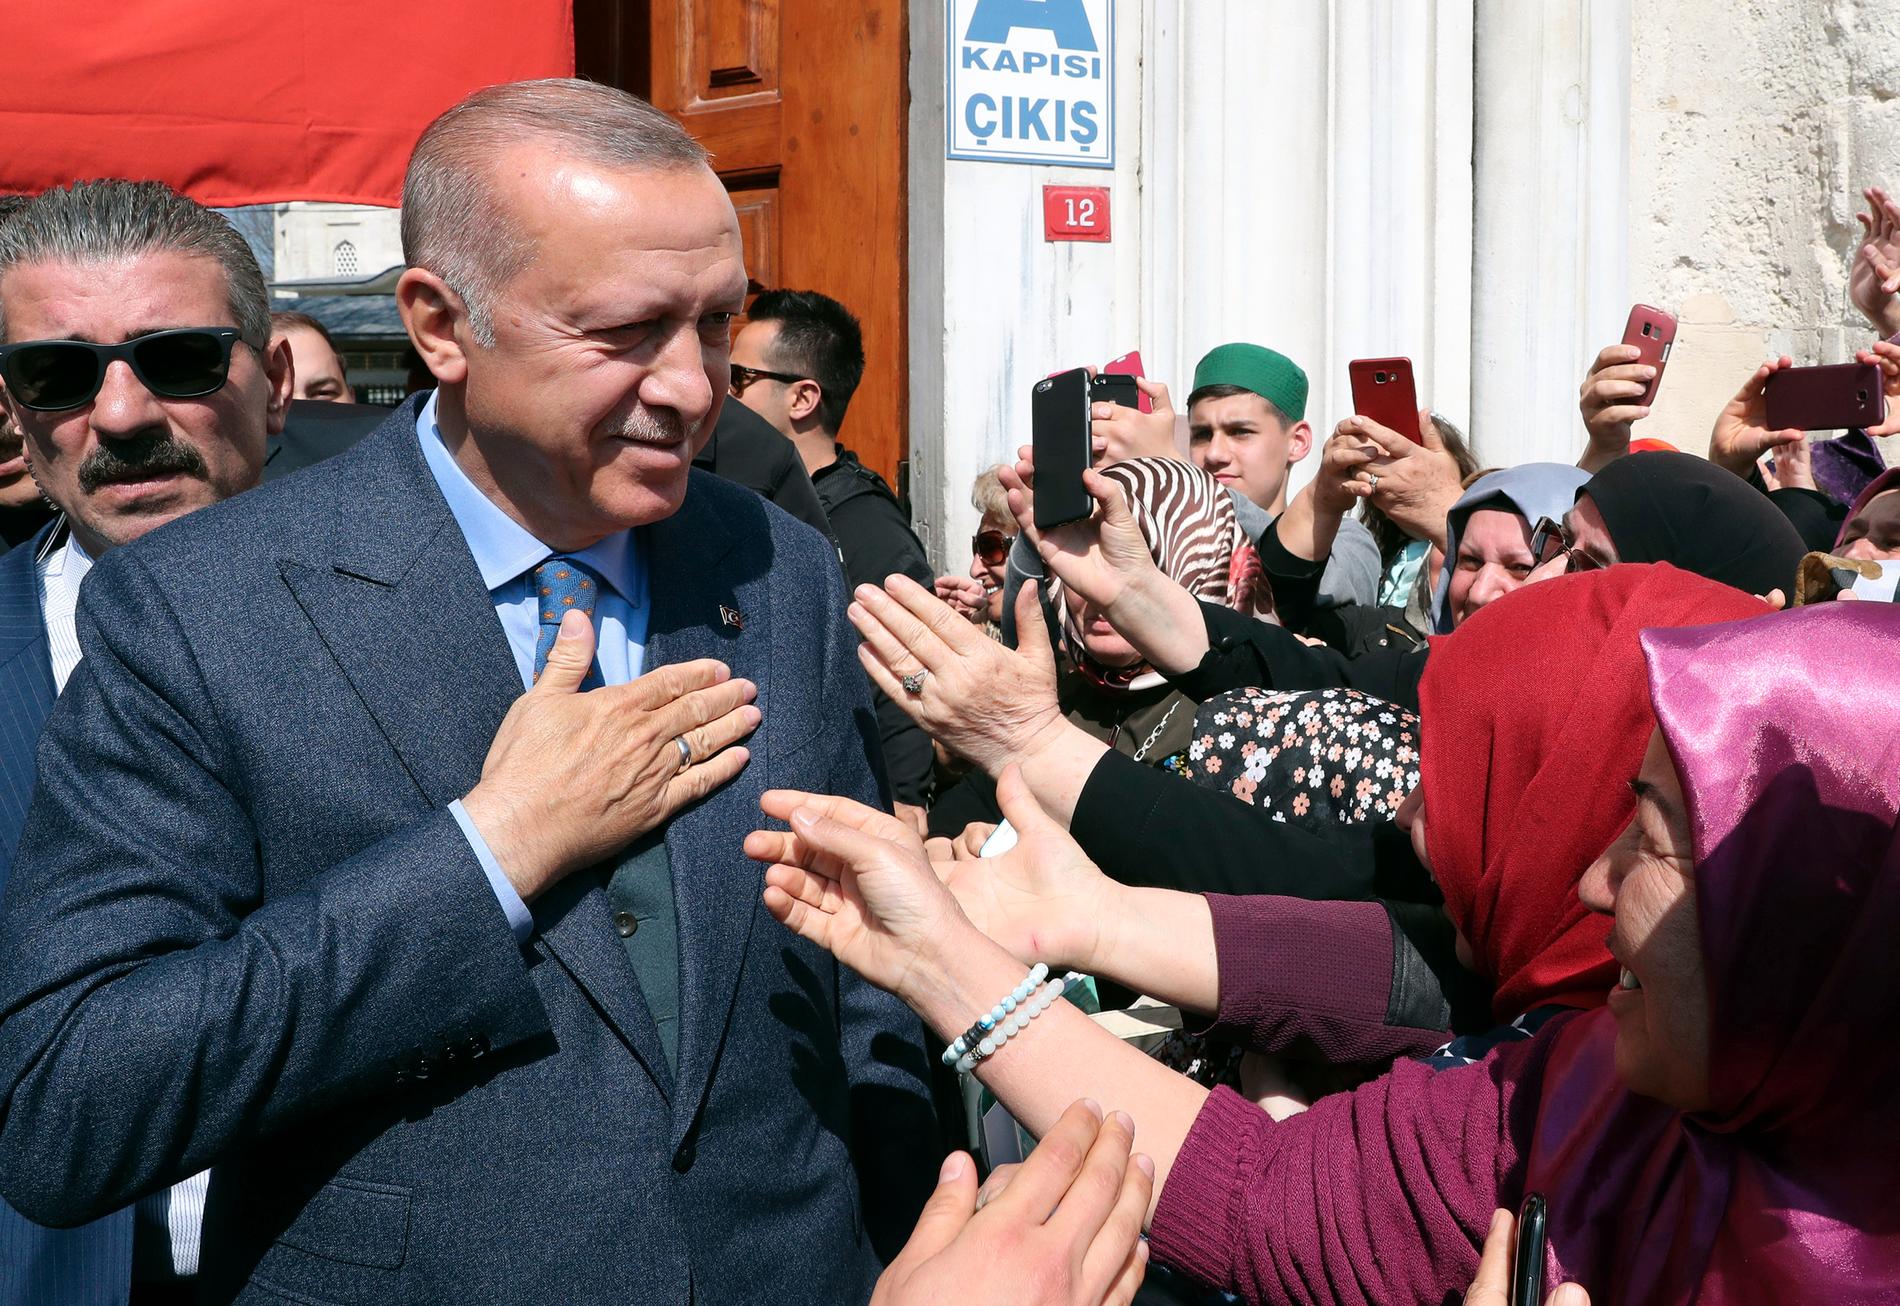 Turkiets president Recep Tayyip Erdogan möter väljare. Arkivbild.